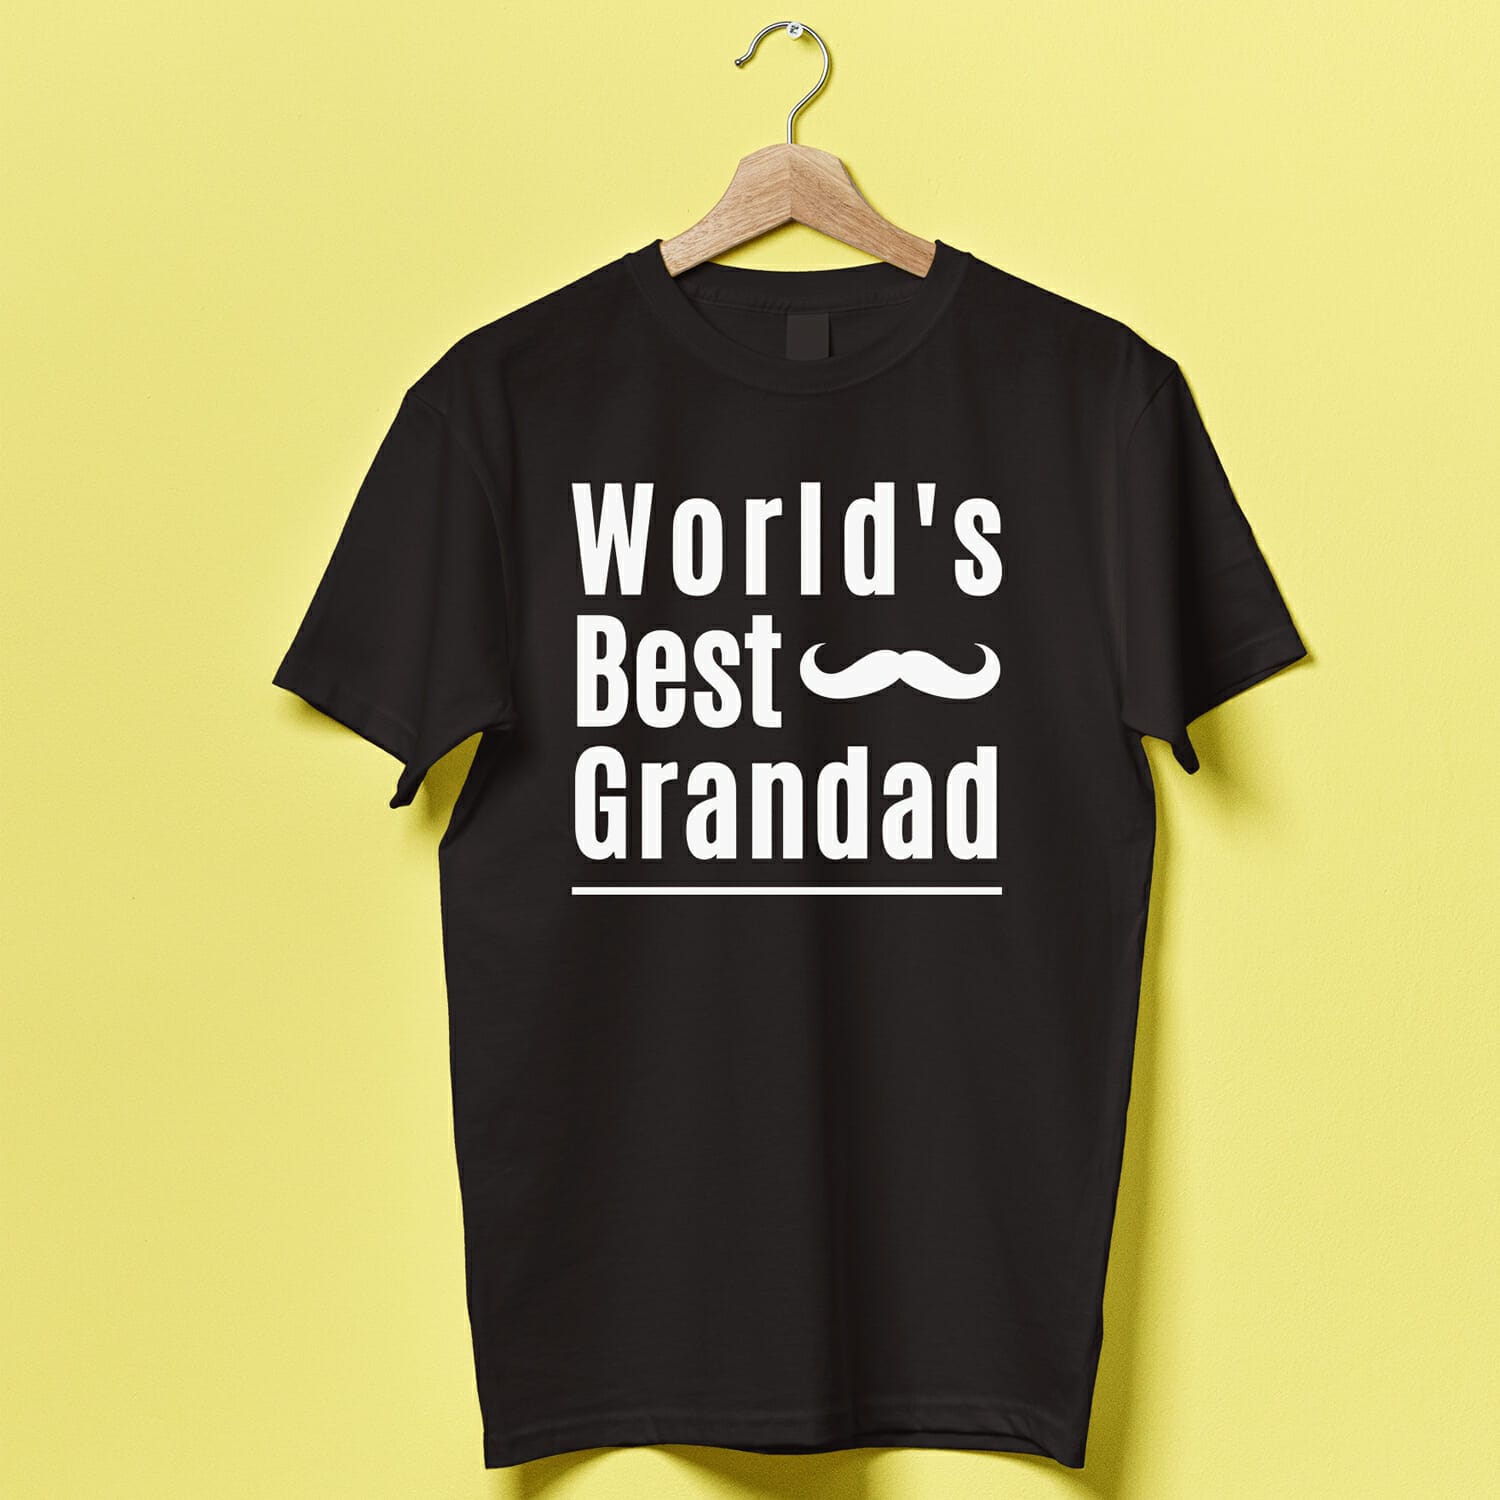 World's Best Grandad T-shirt Design